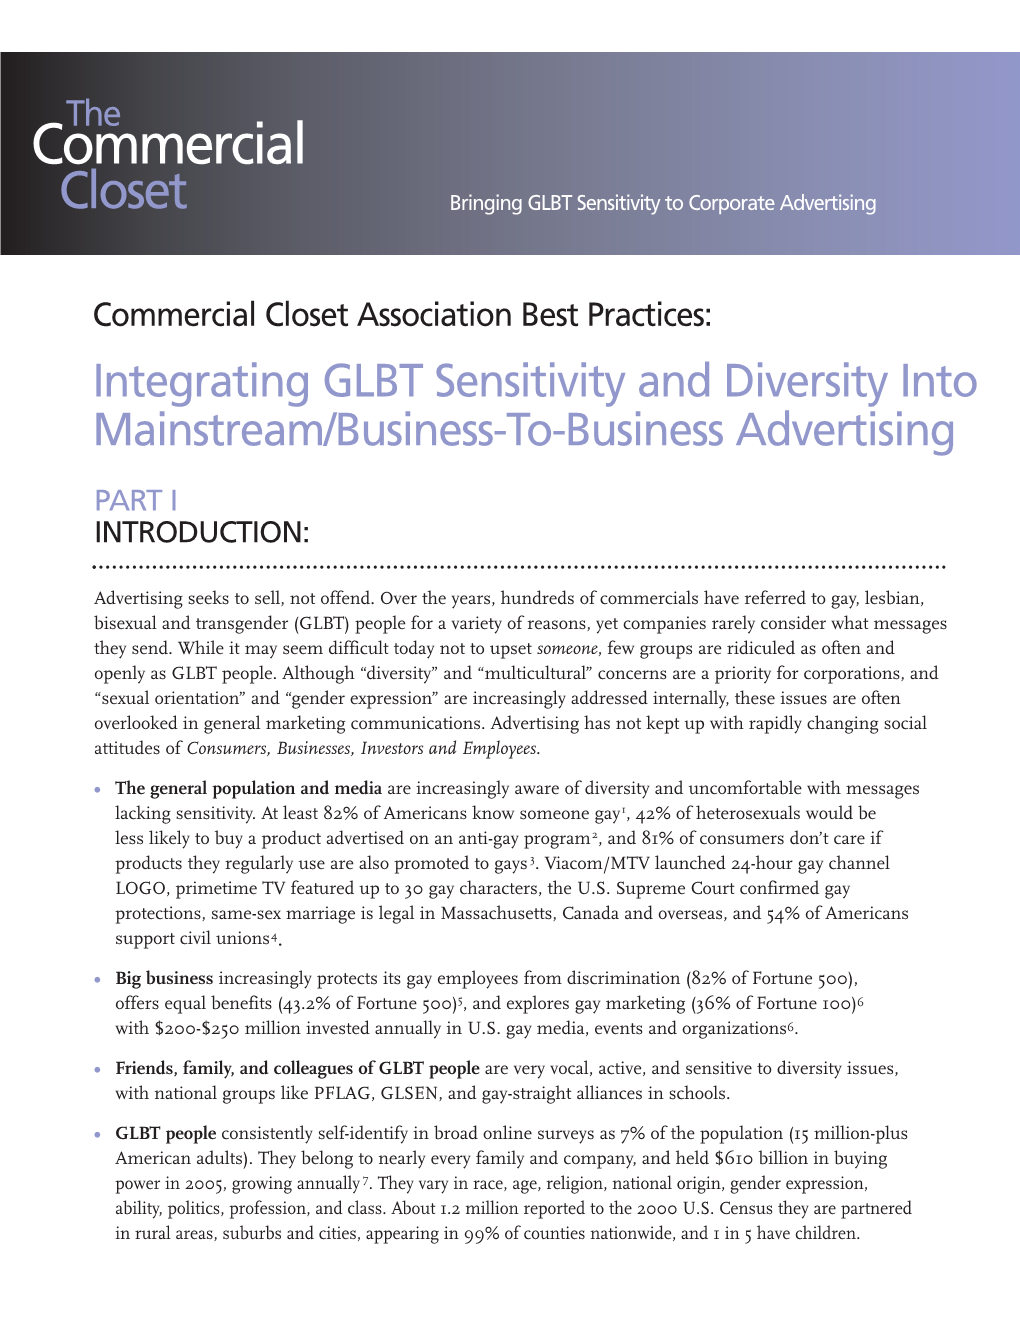 Commercial Closet Bringing GLBT Sensitivity to Corporate Advertising